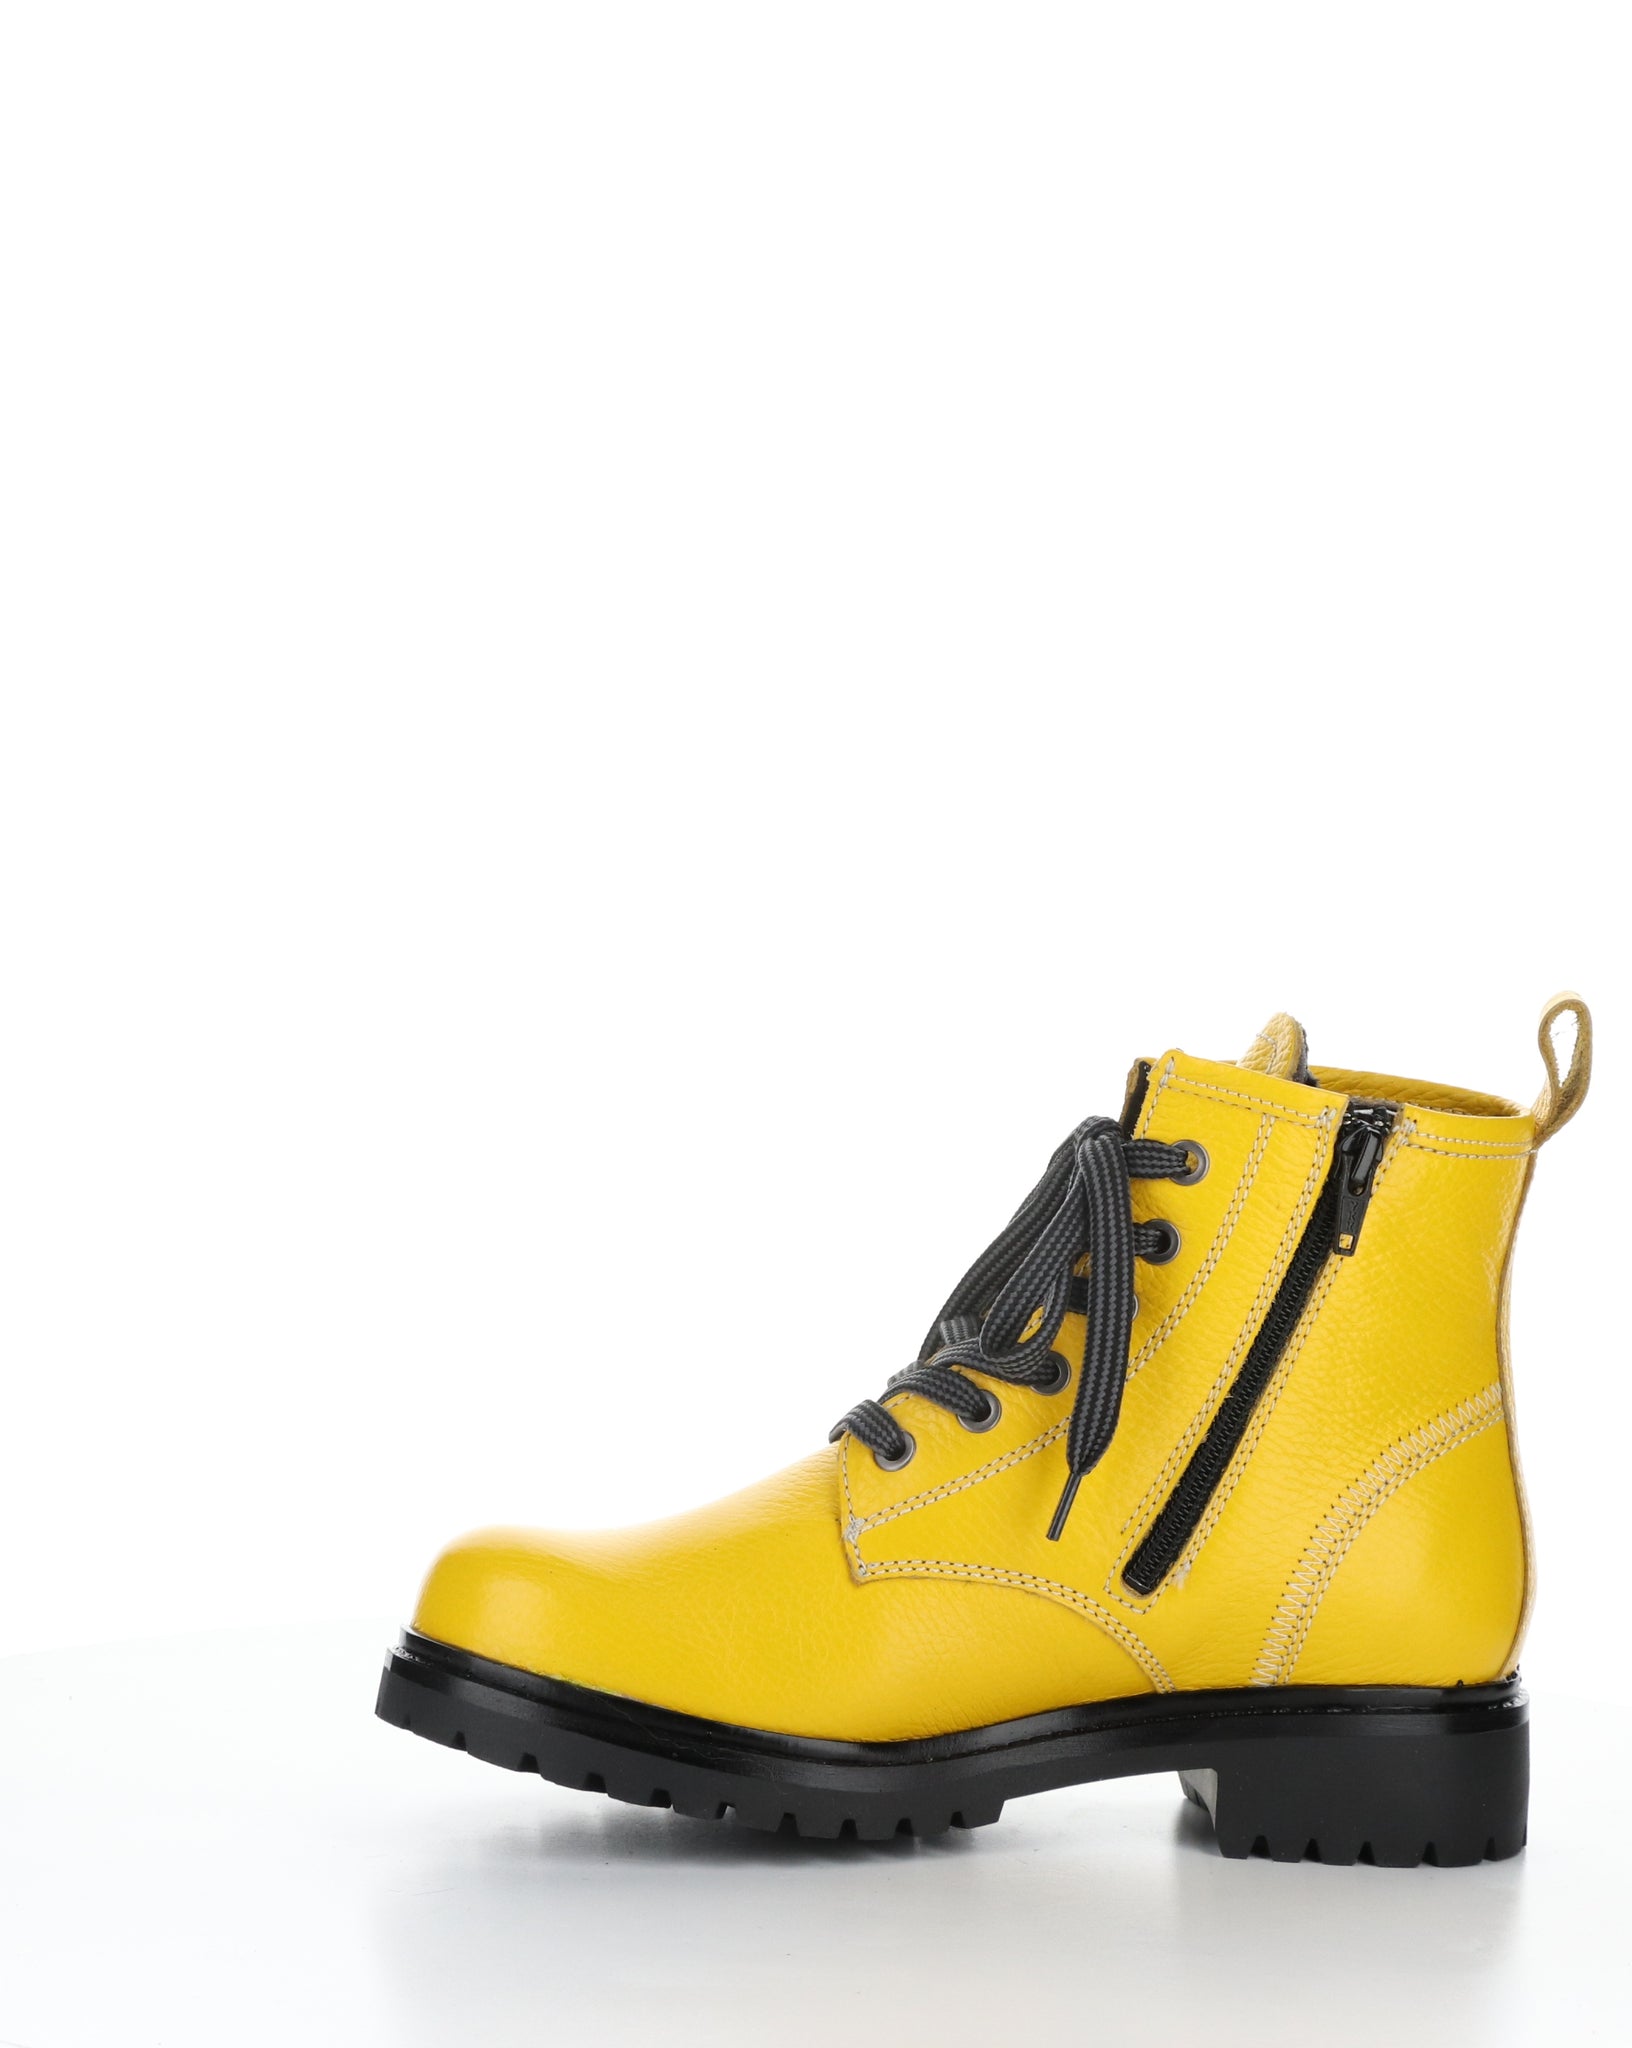 Bos&Co. "Carinas" Mustard - Waterproof Boot